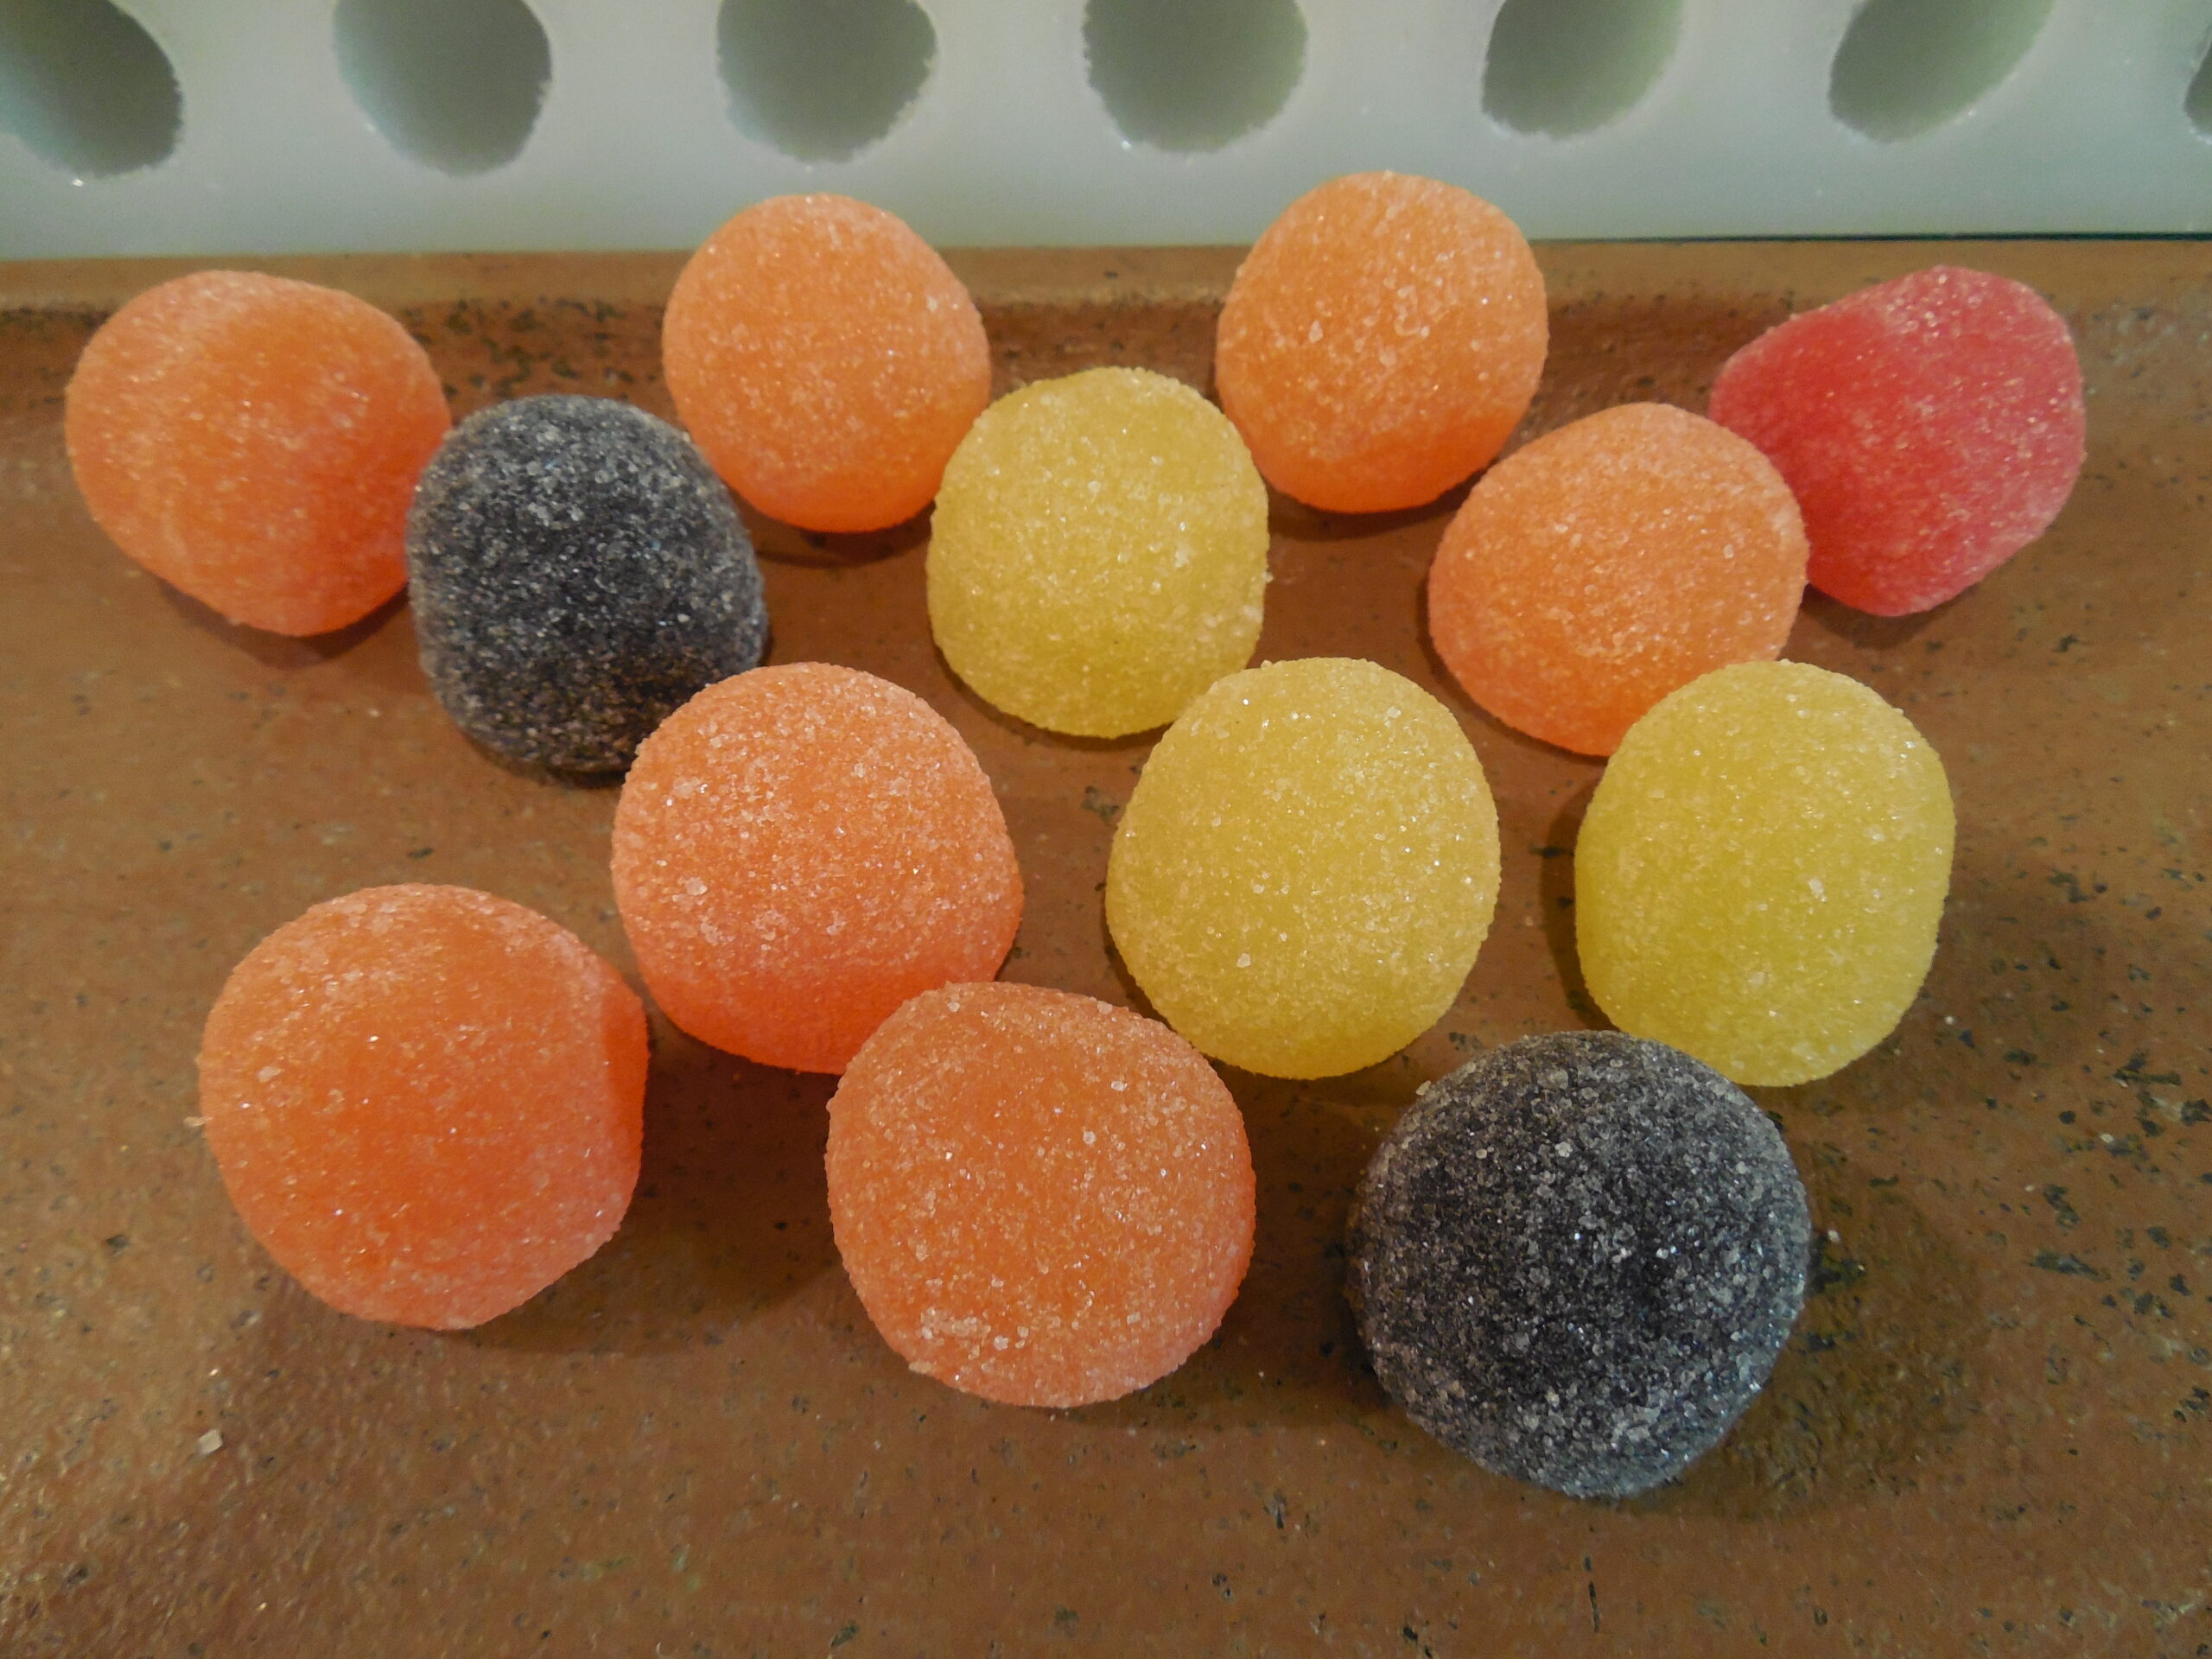 Gummy Bear Embeds 182 Cavity Silicone Mold 8018